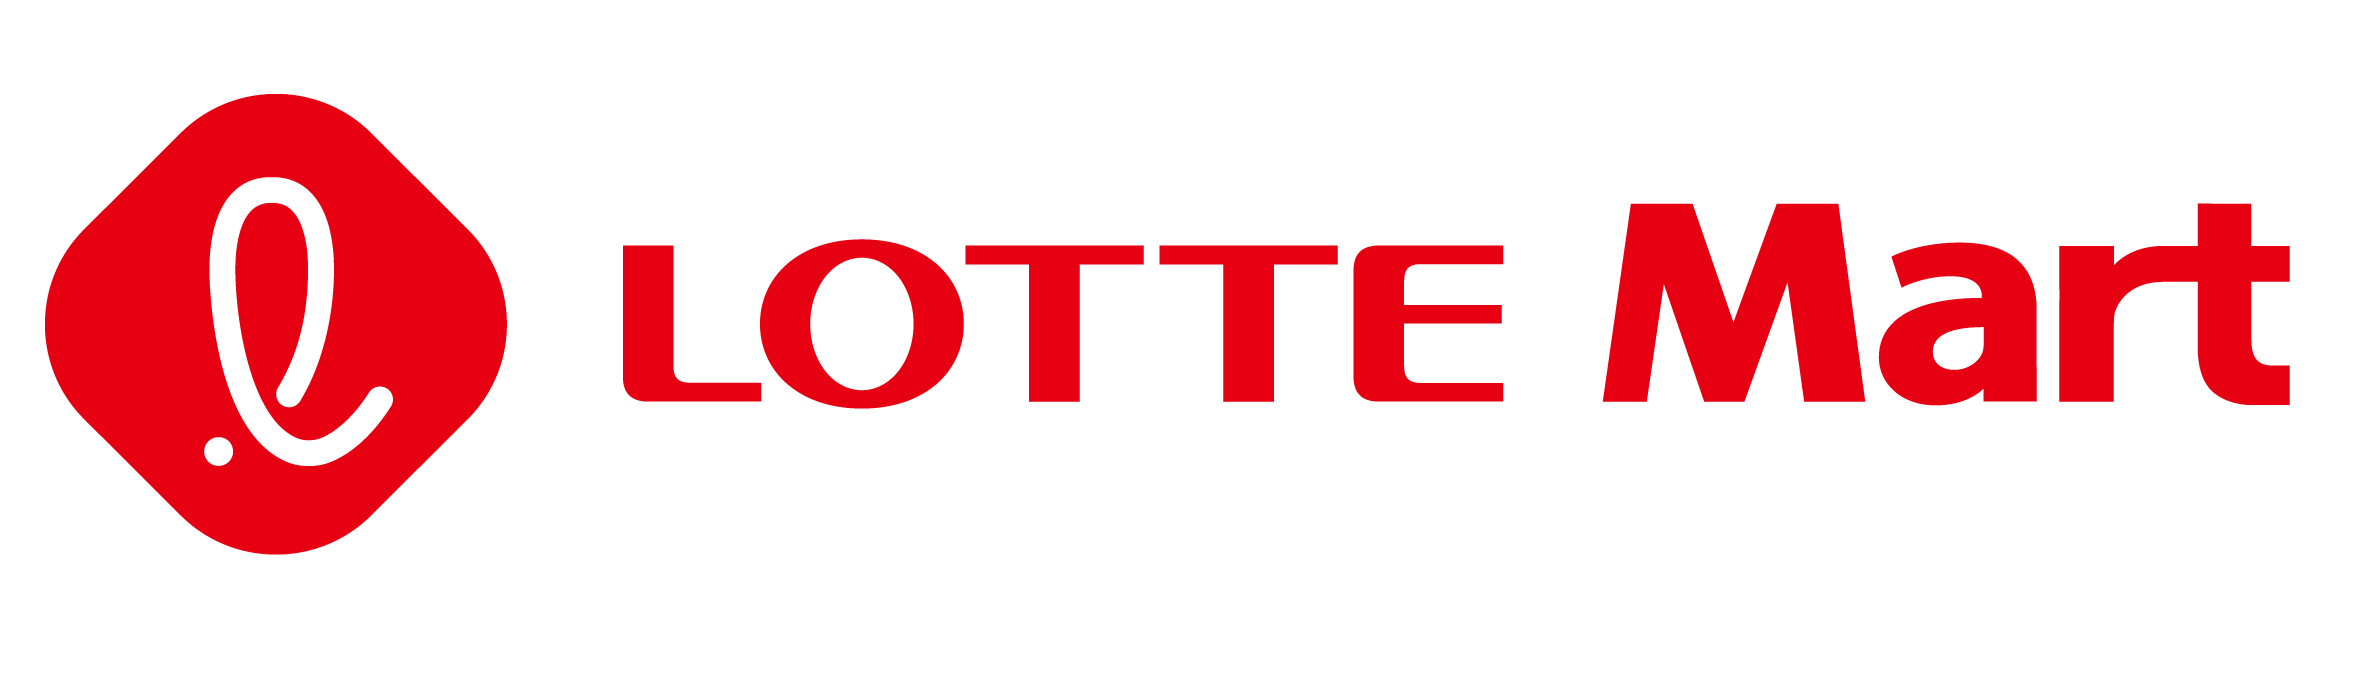 lottemart_logo